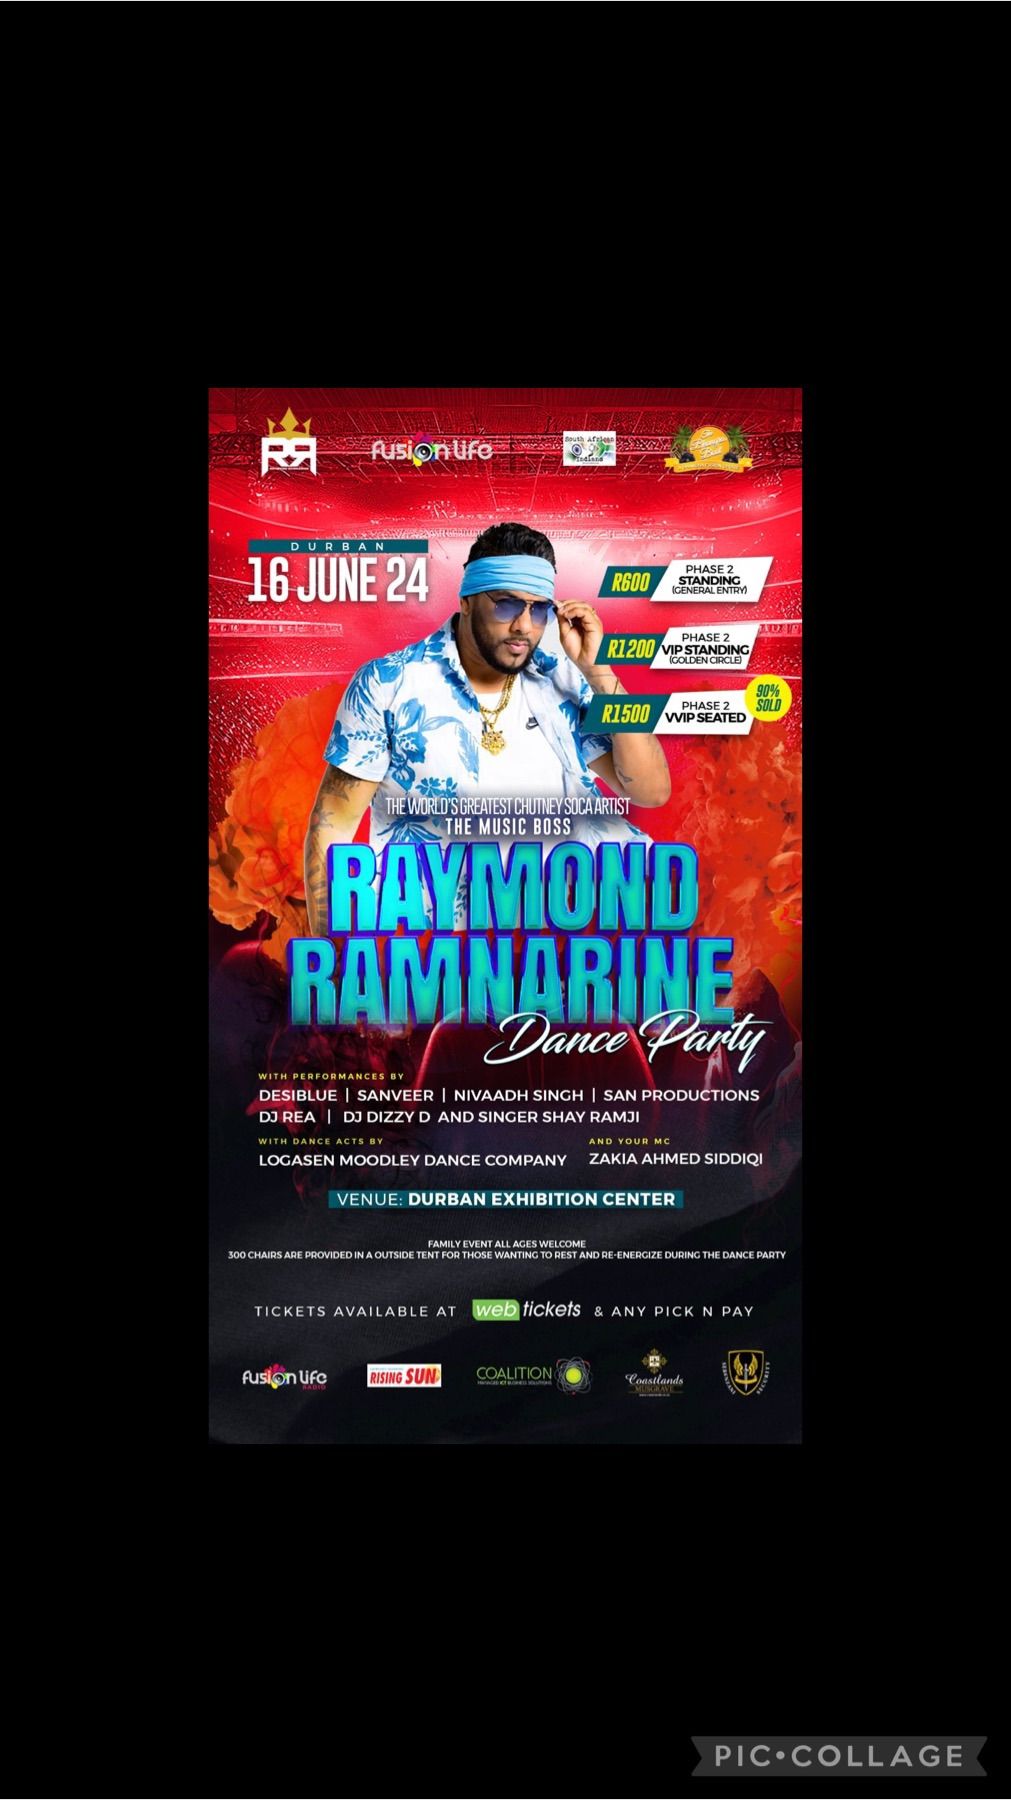 Raymond Ramnarine Live in Durban